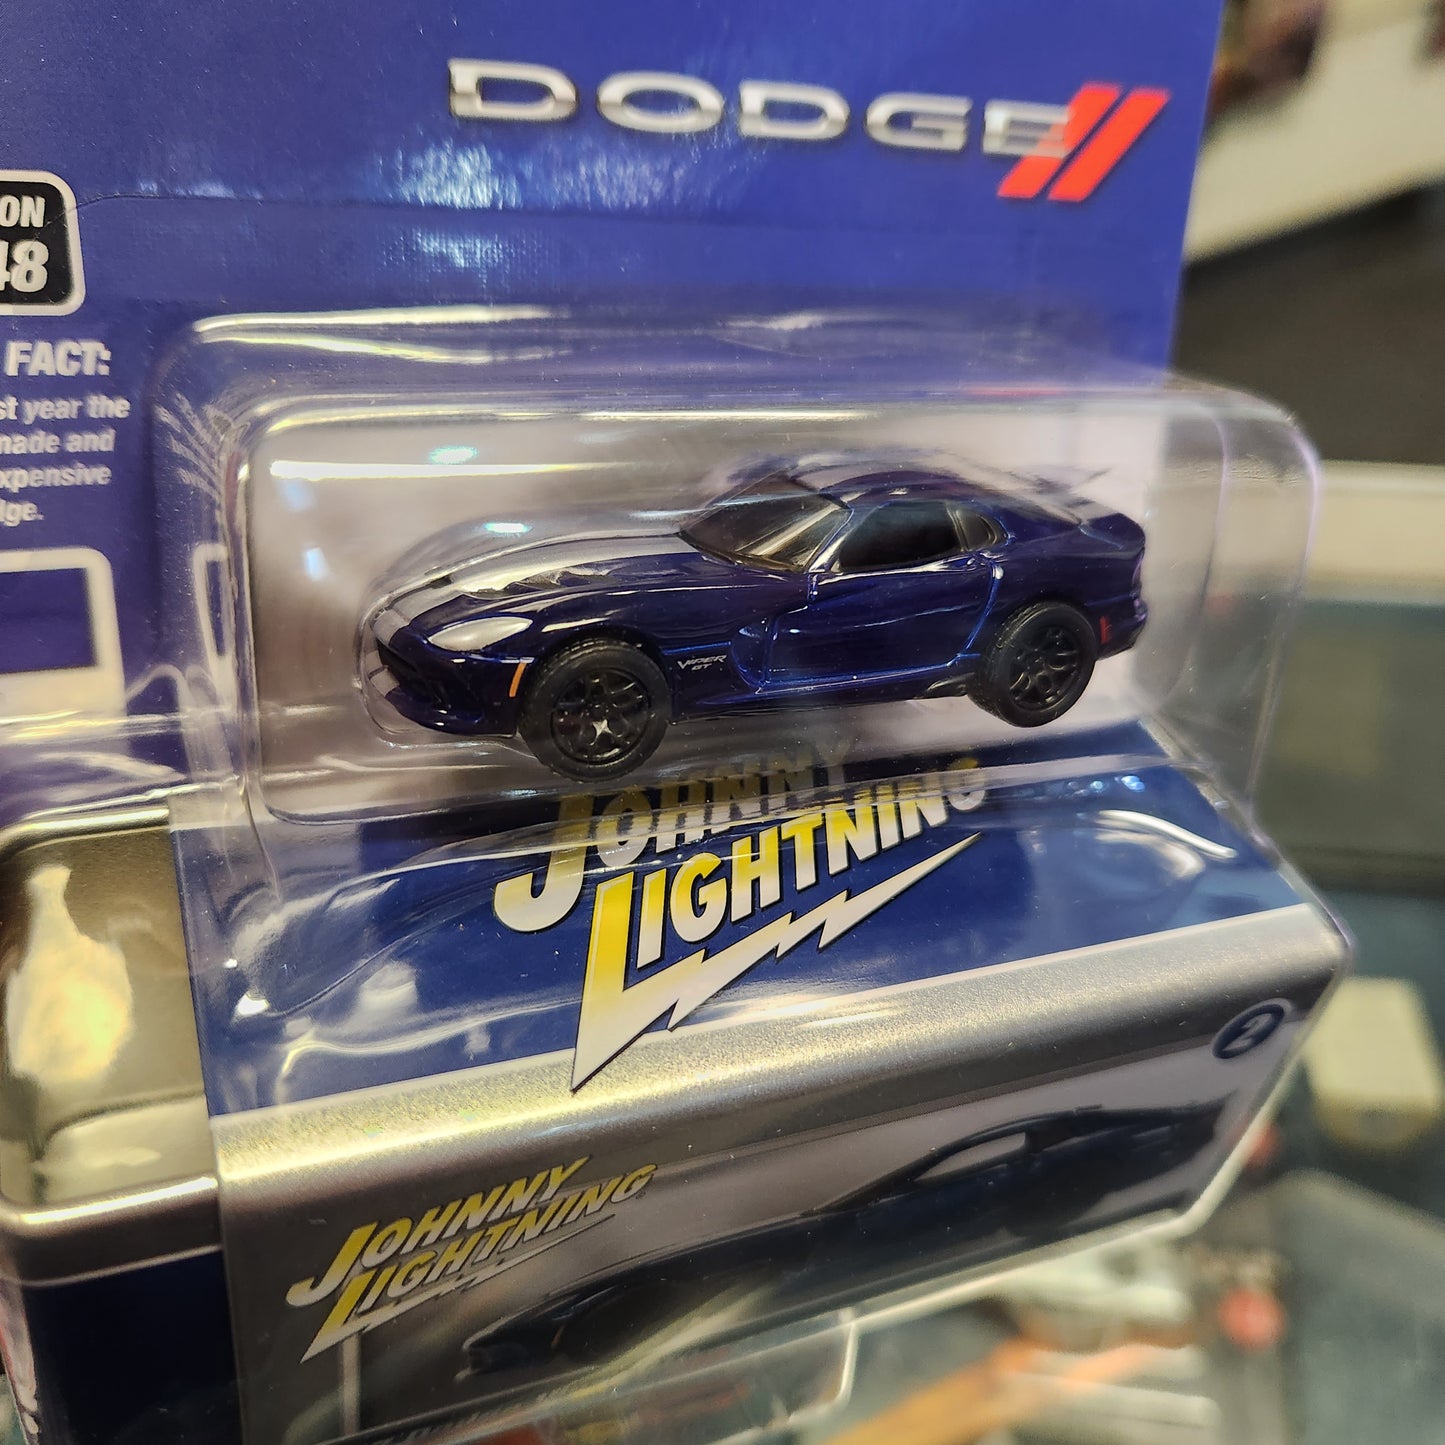 Johnny Lightning - 2023 Collector Tin R2 Vers. B - 2017 Dodge Viper GTC - Pearl Blue